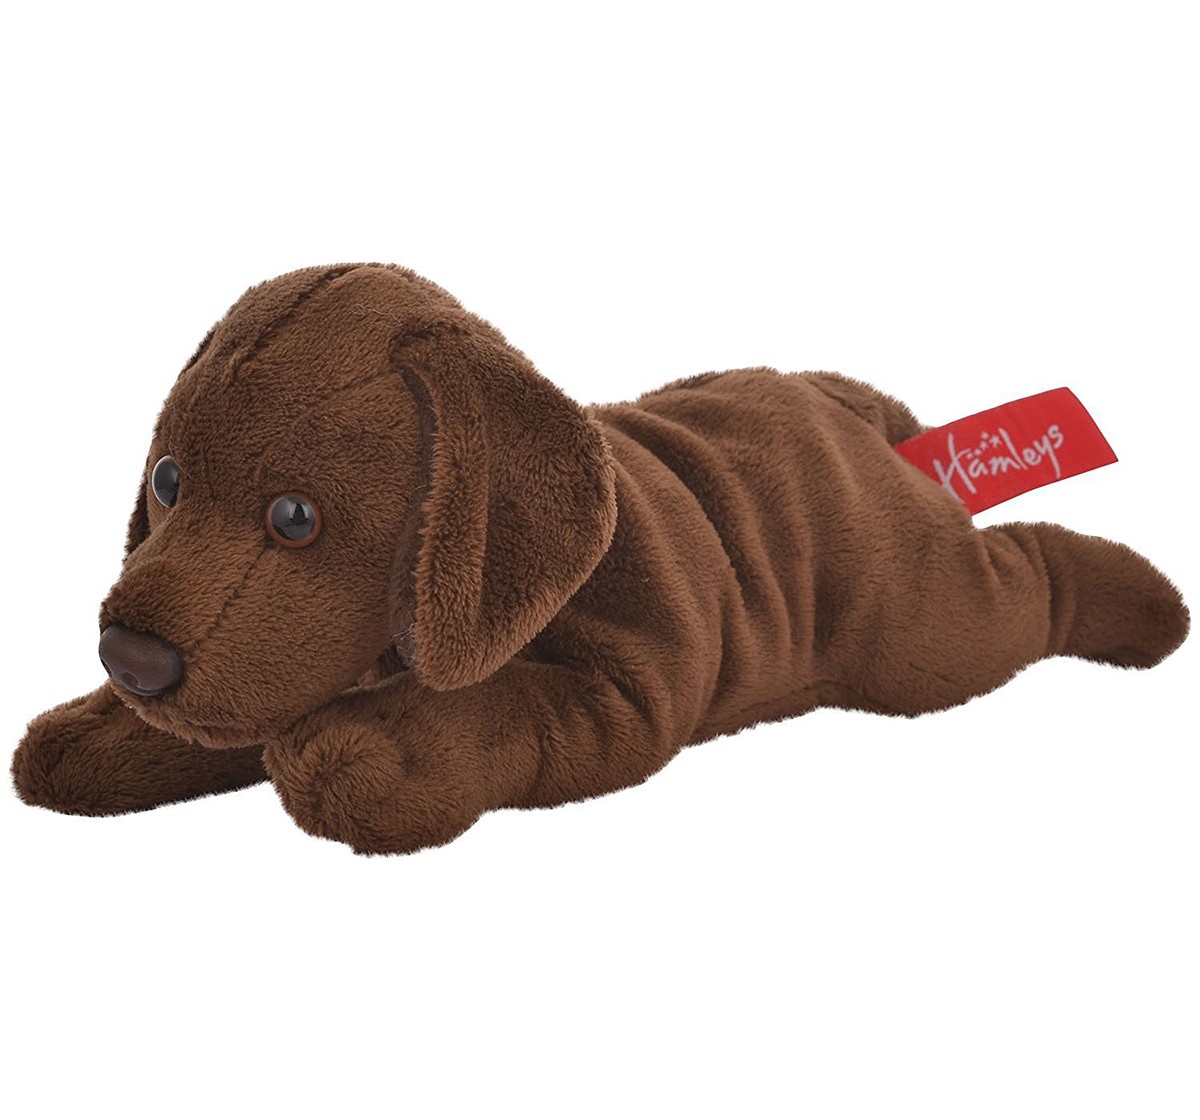 Hamleys Labrador Plush Toy, Brown (3-Inch) Animals & Birds for Kids age 0M+ - 8.5 Cm (Brown)